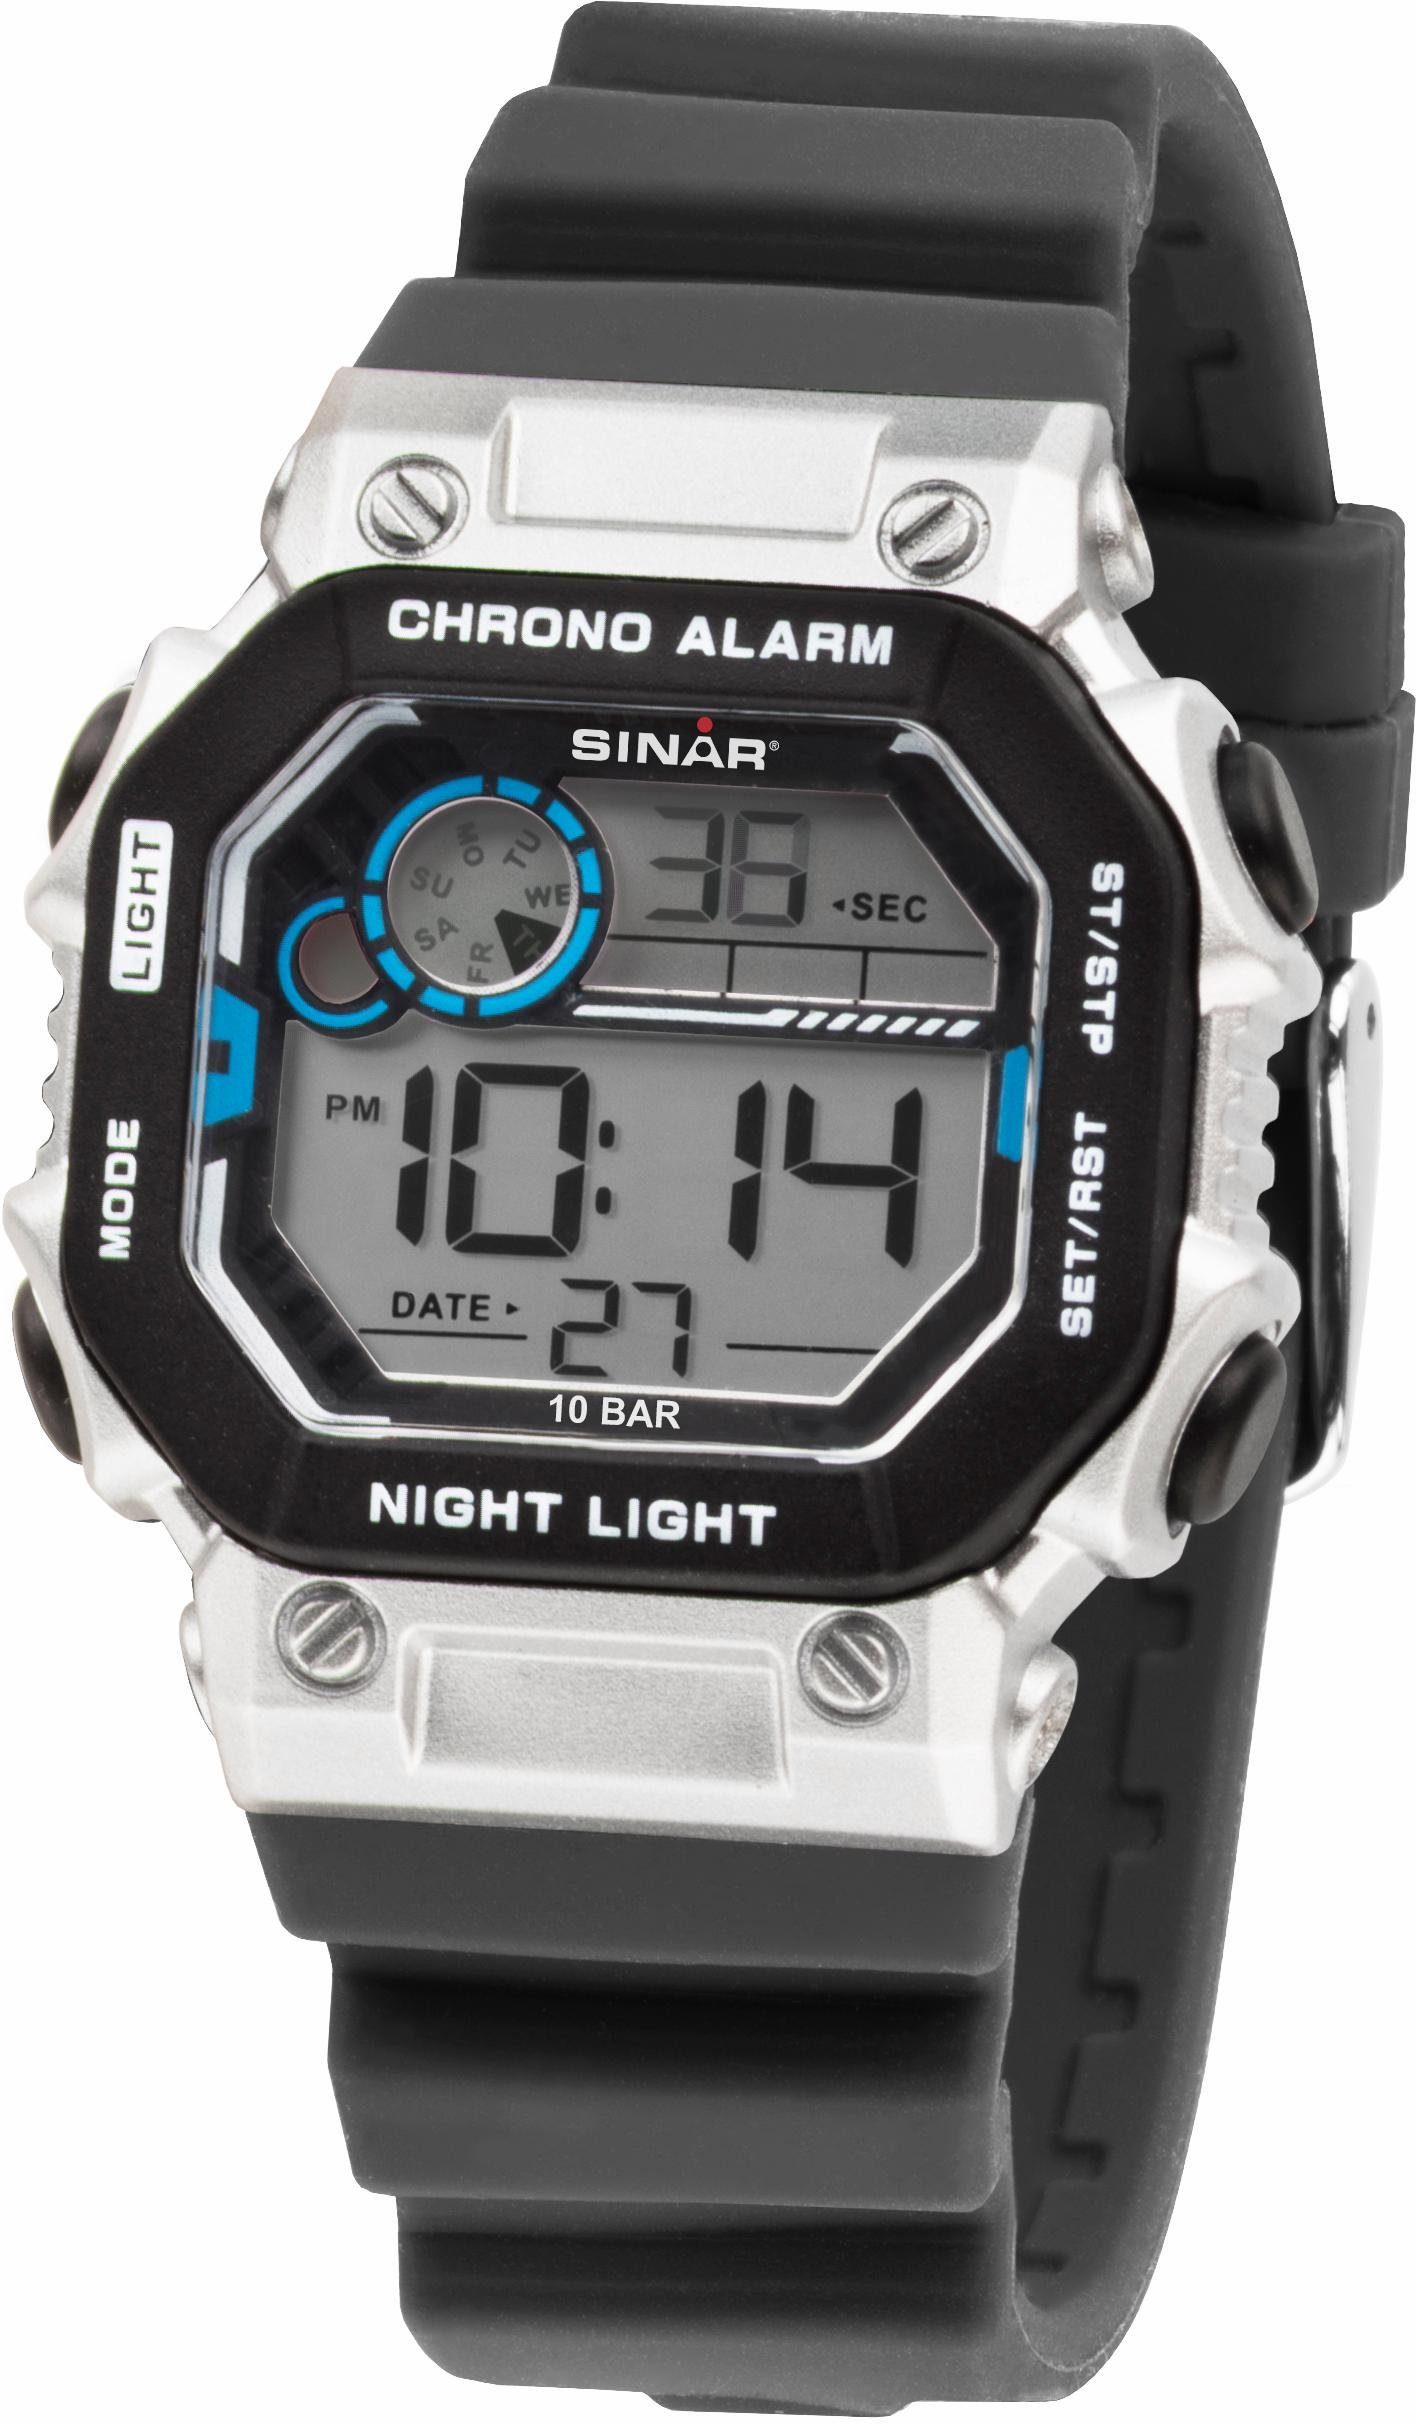 SINAR Chronograaf XE-55-19 ook ideaal als cadeau makkelijk gekocht | OTTO